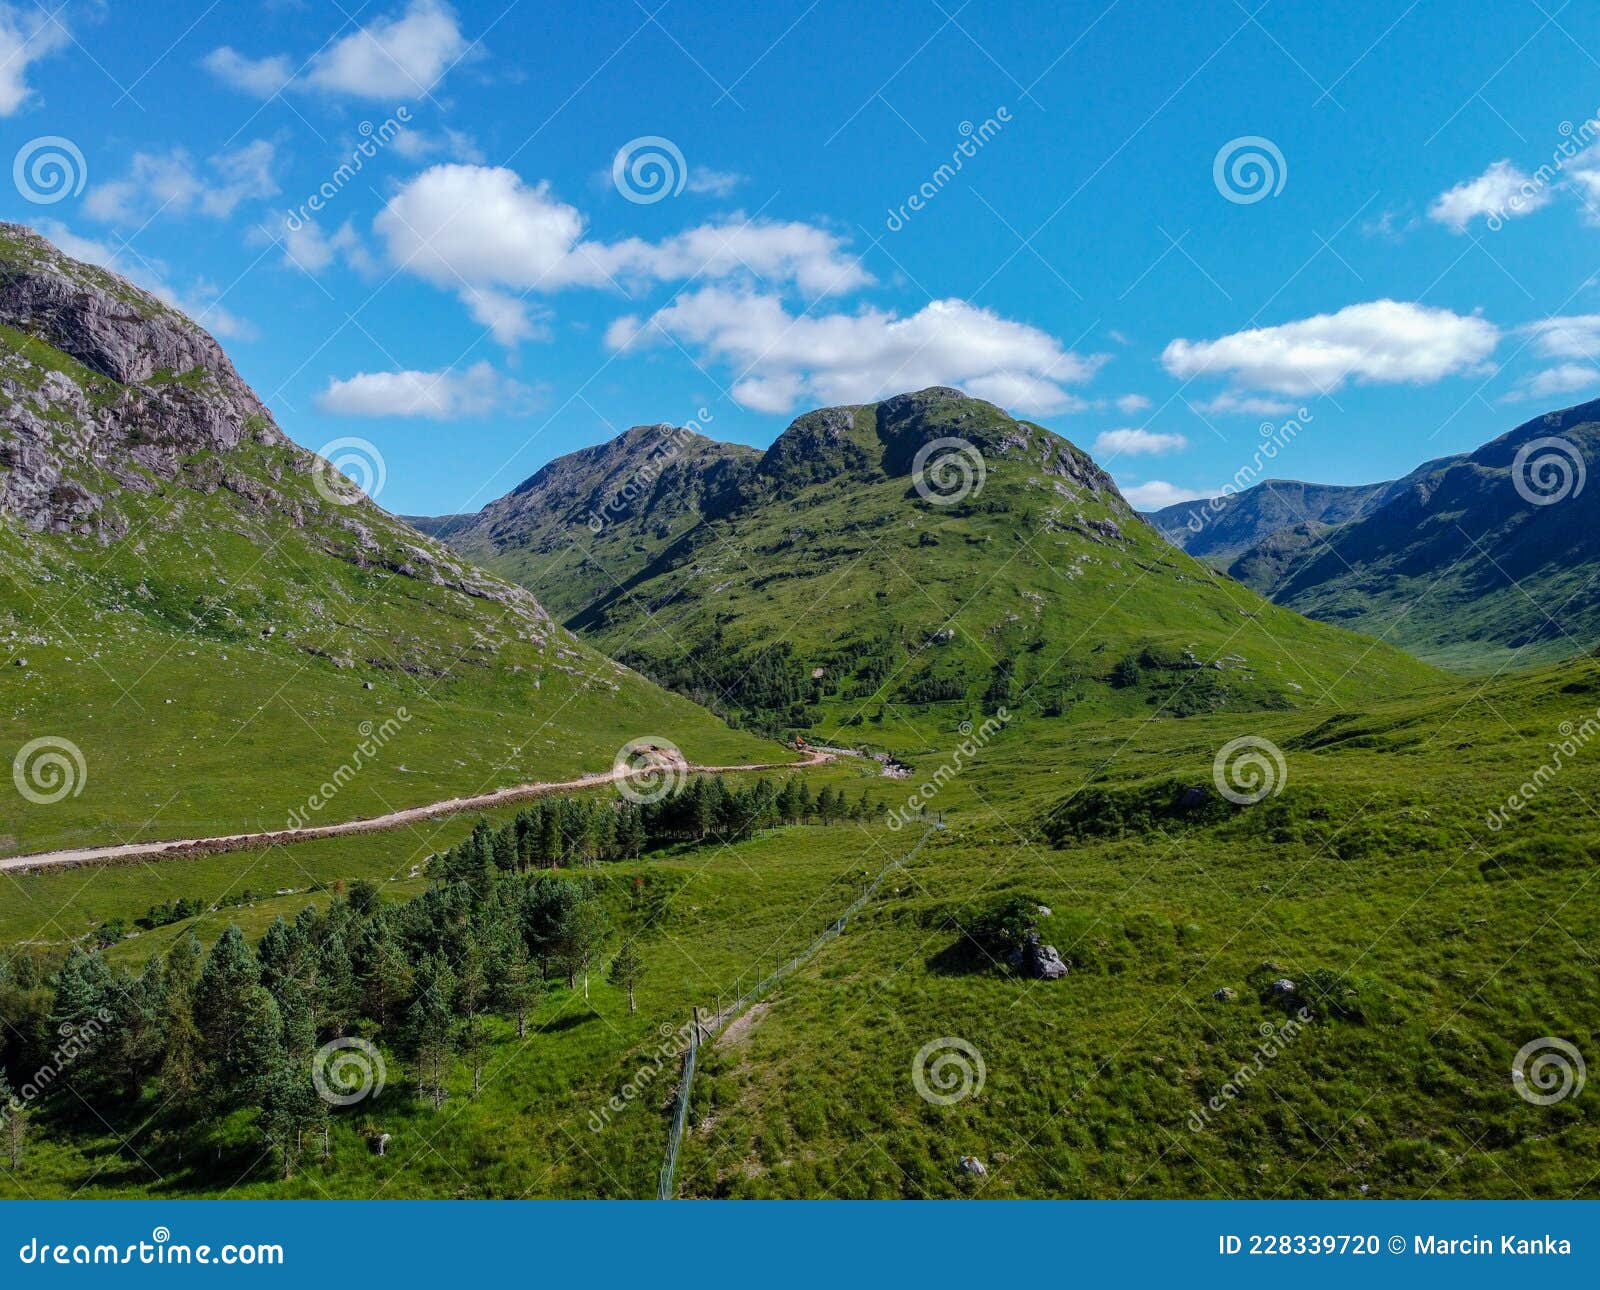 scotland glen etive, james bond skyfall road